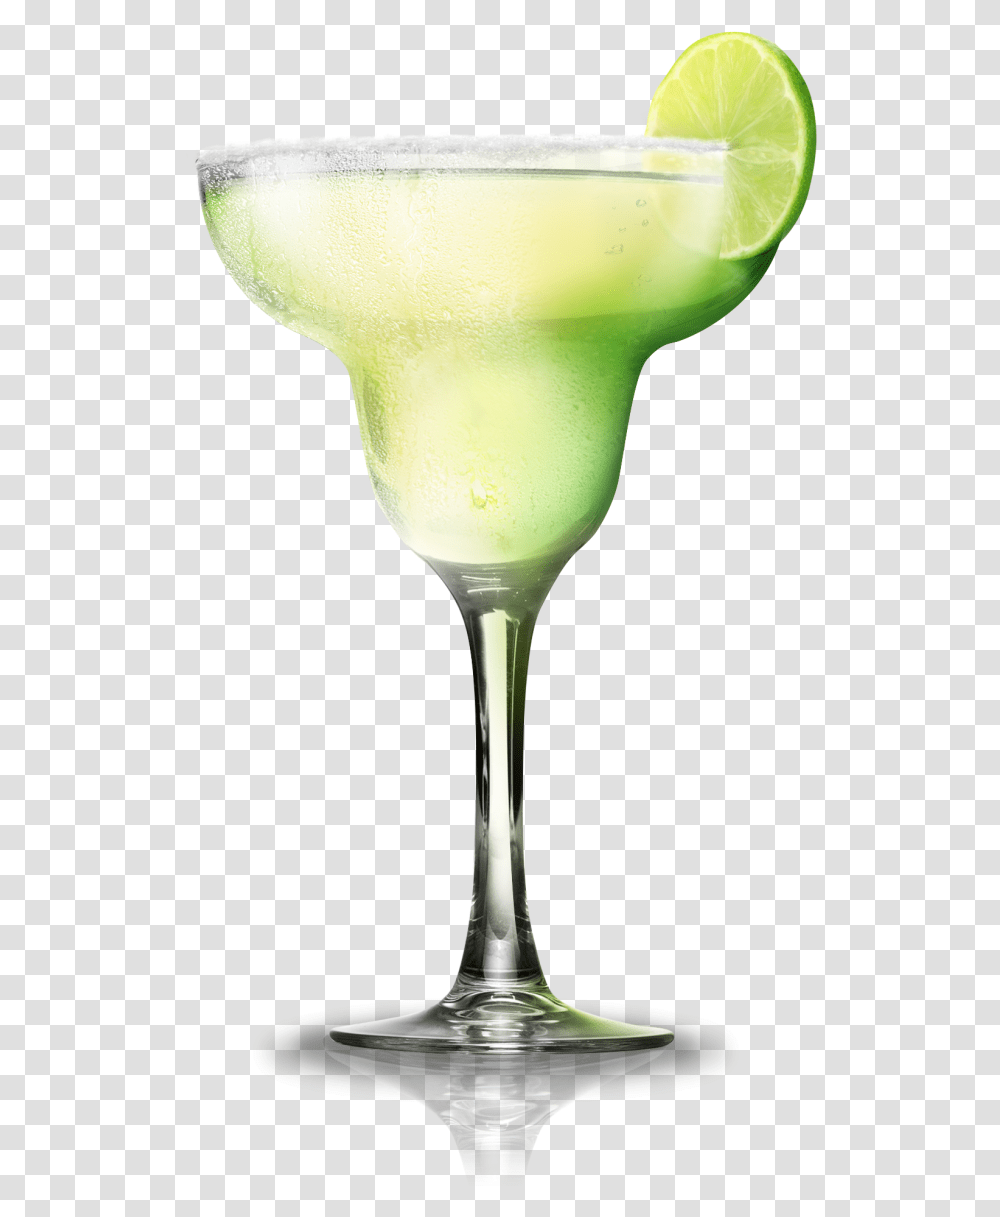 Margarita For Free Download Margarita, Cocktail, Alcohol, Beverage, Drink Transparent Png